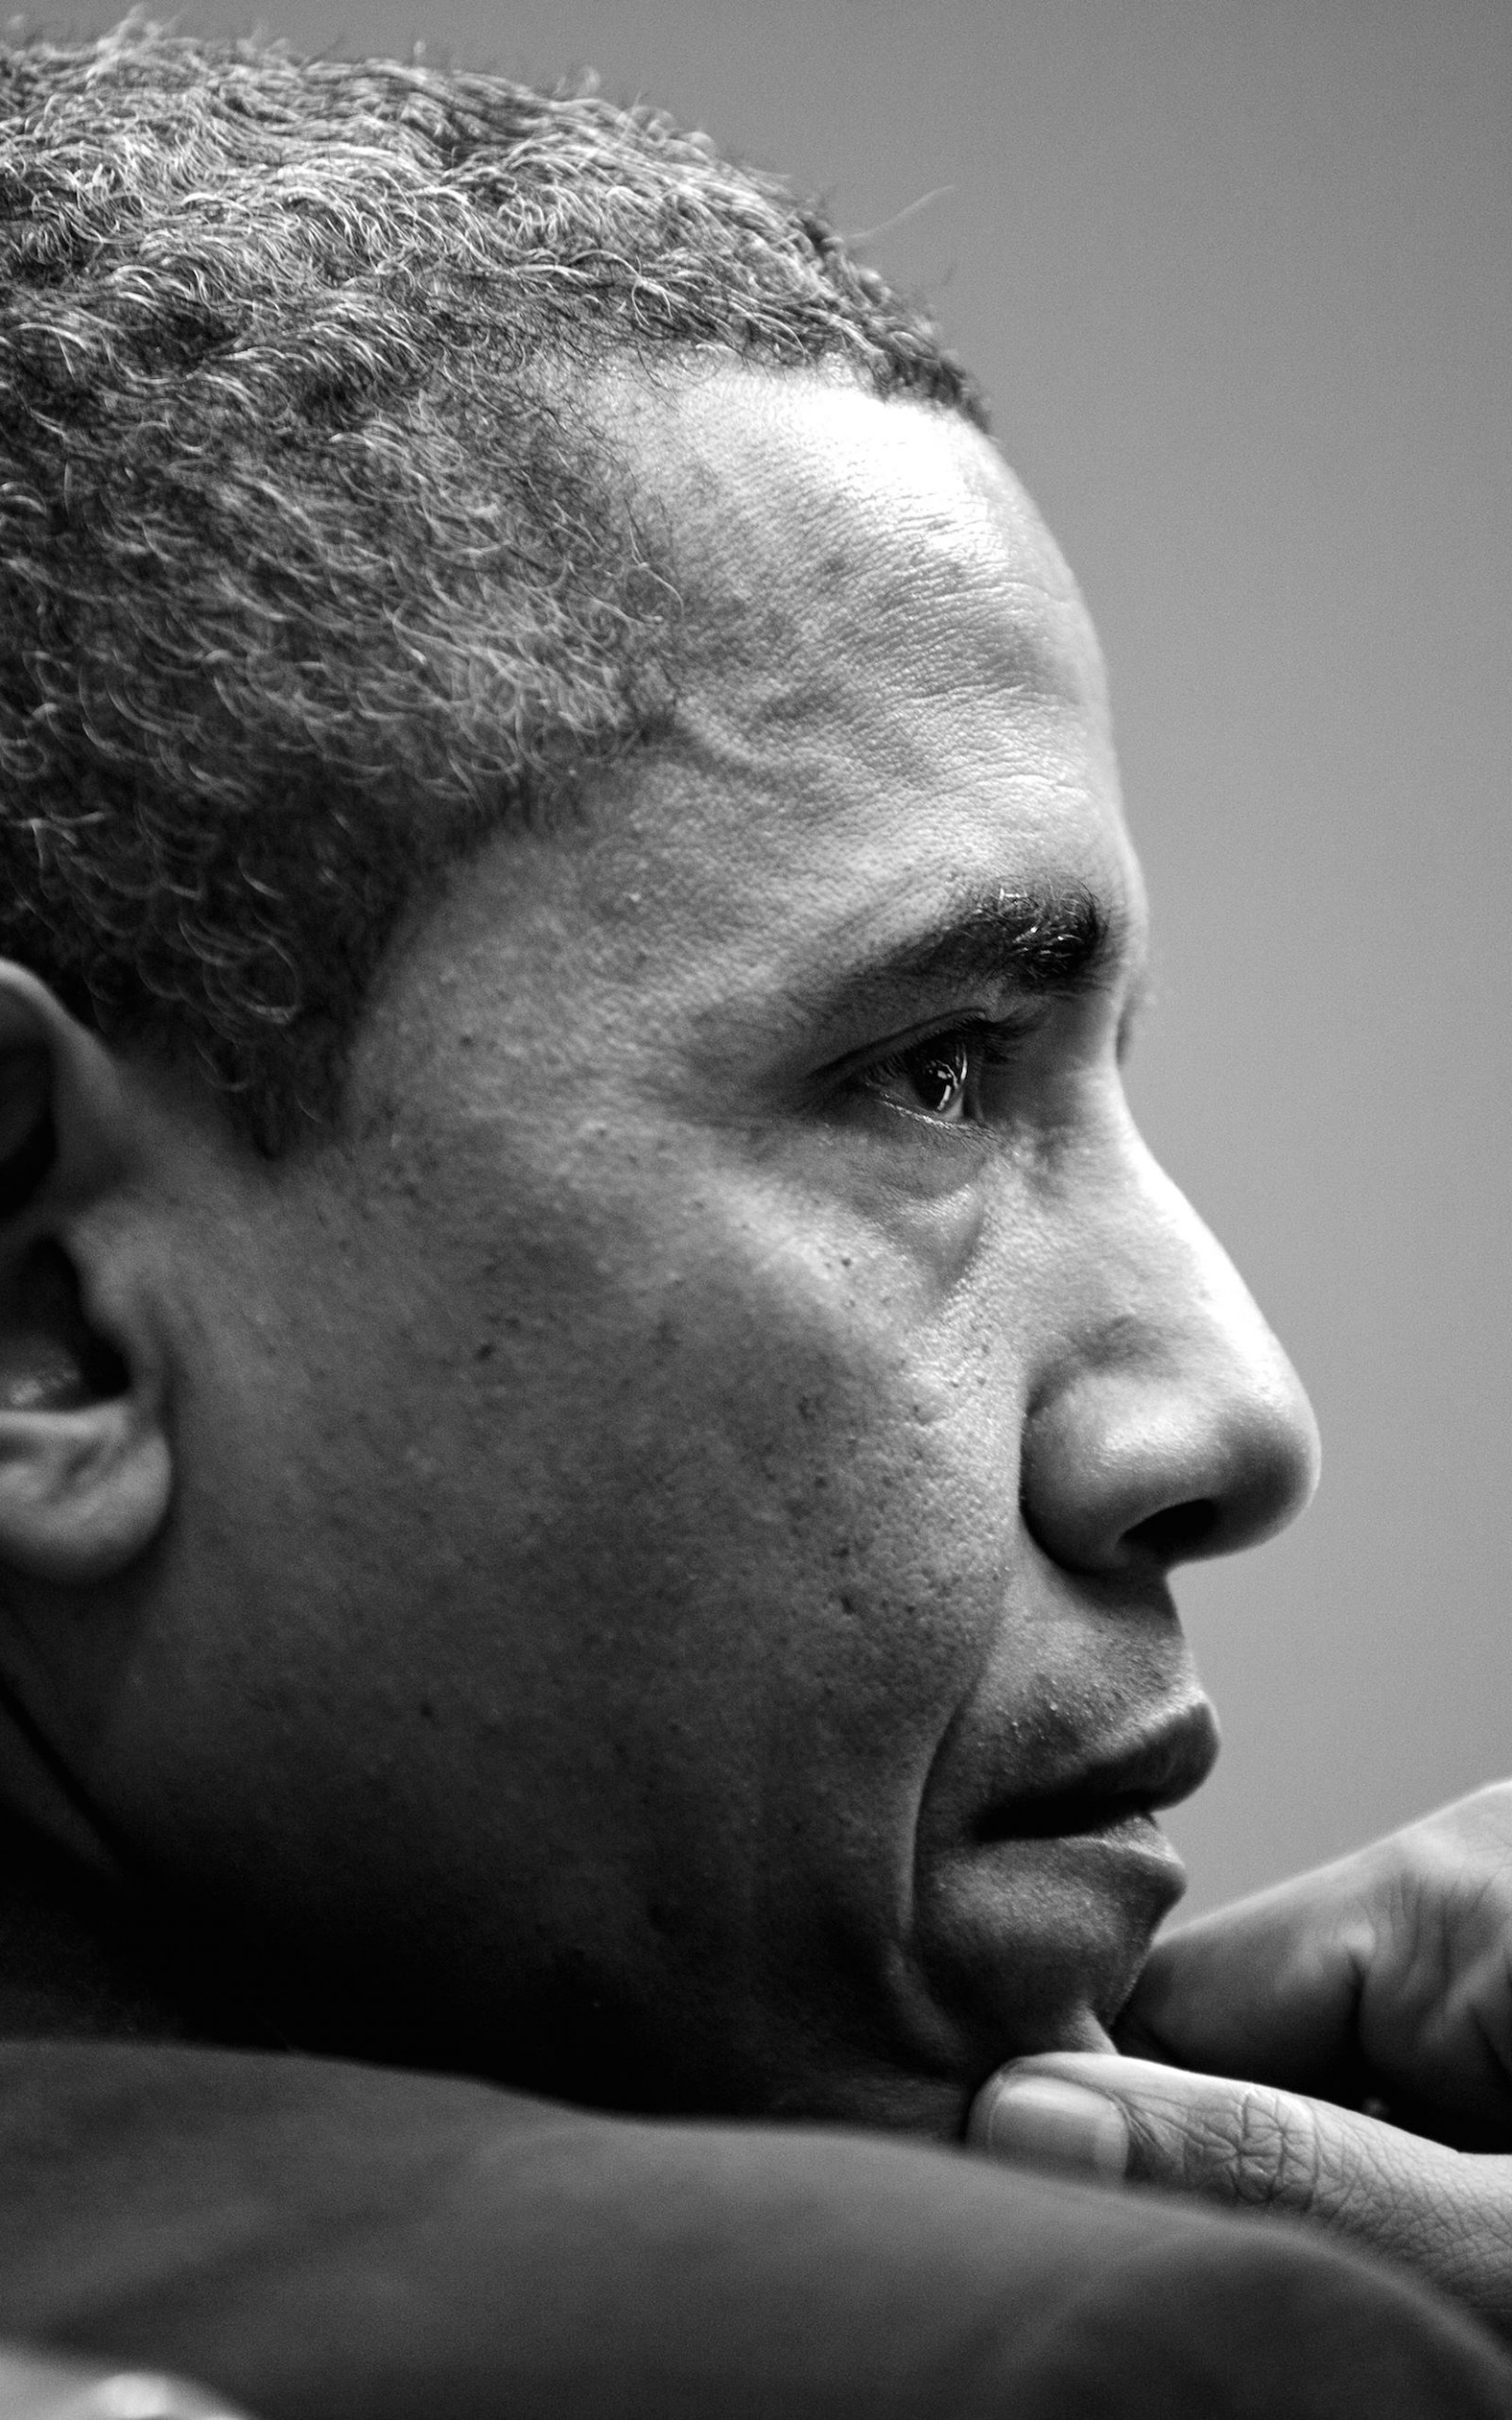 Barack Obama in Black & White Wallpaper for Amazon Kindle Fire HDX 8.9